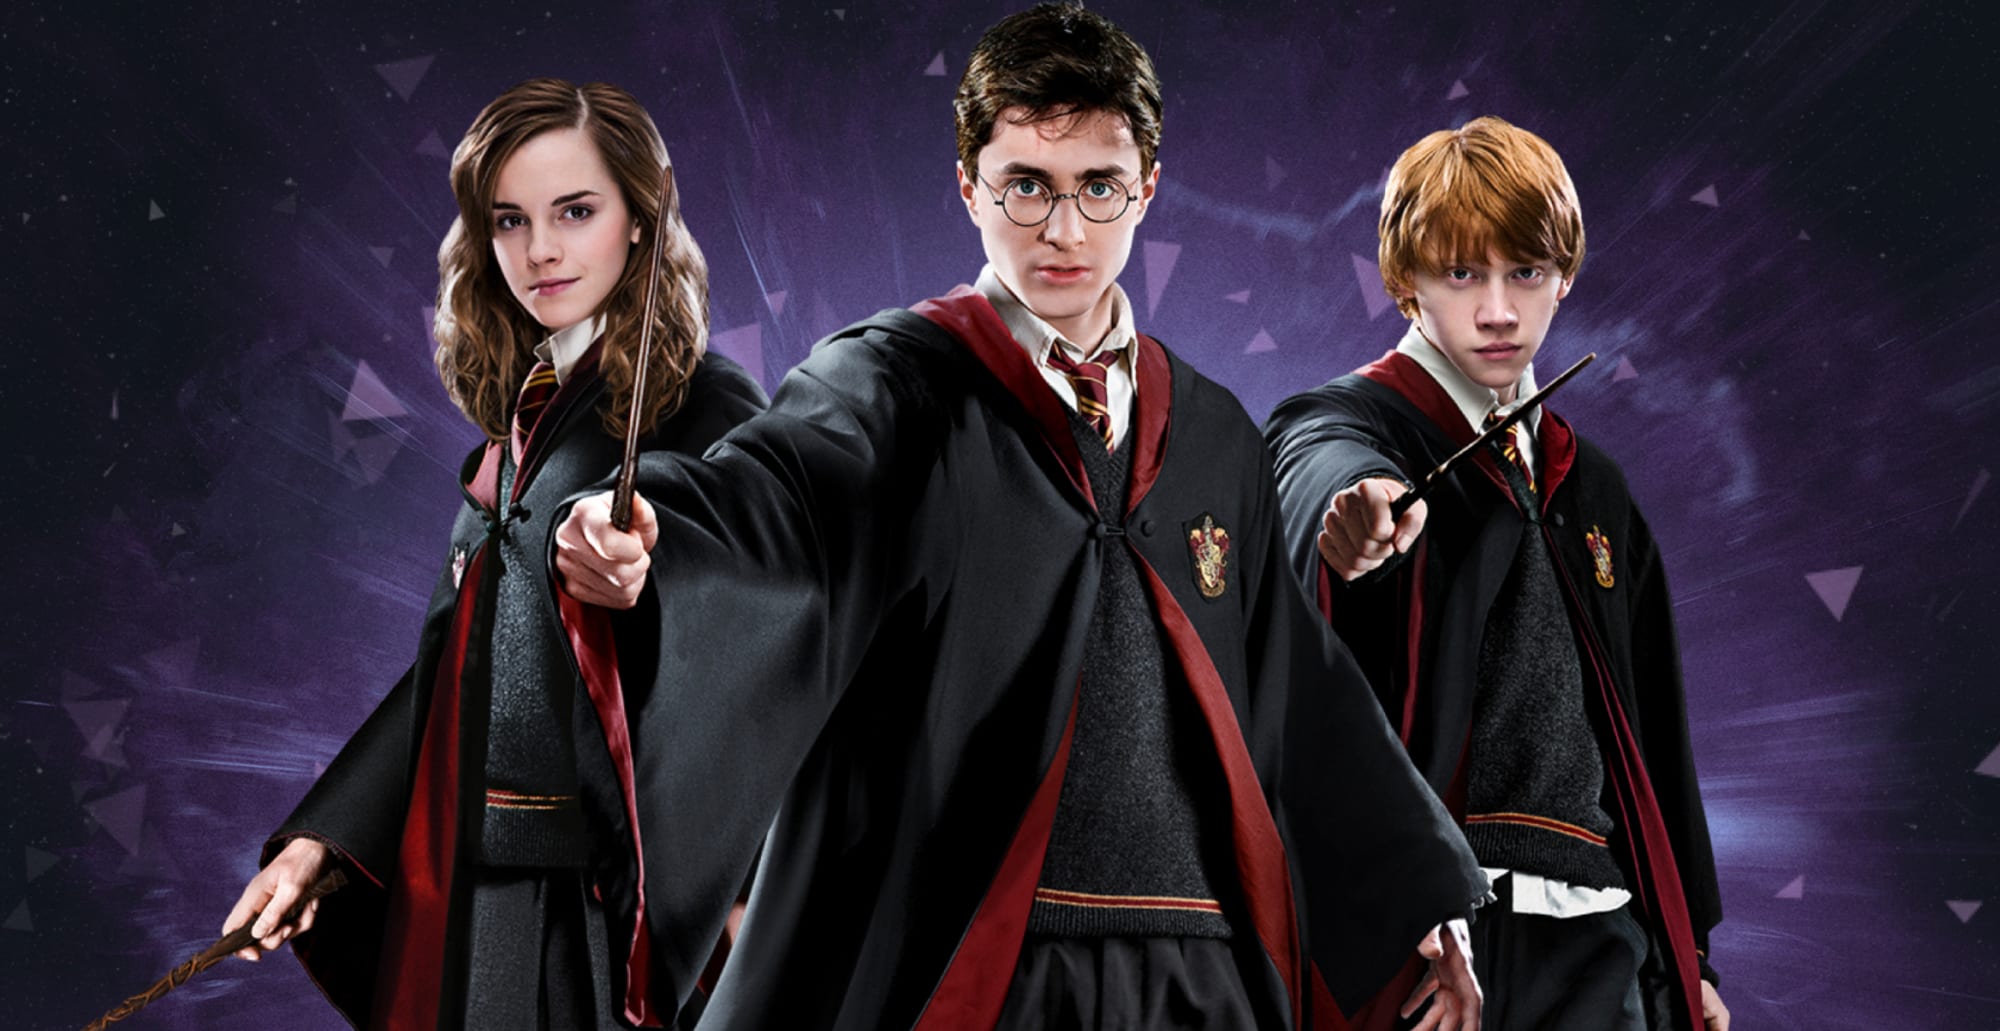 Harry Potter Max Original Series, Official Announcement